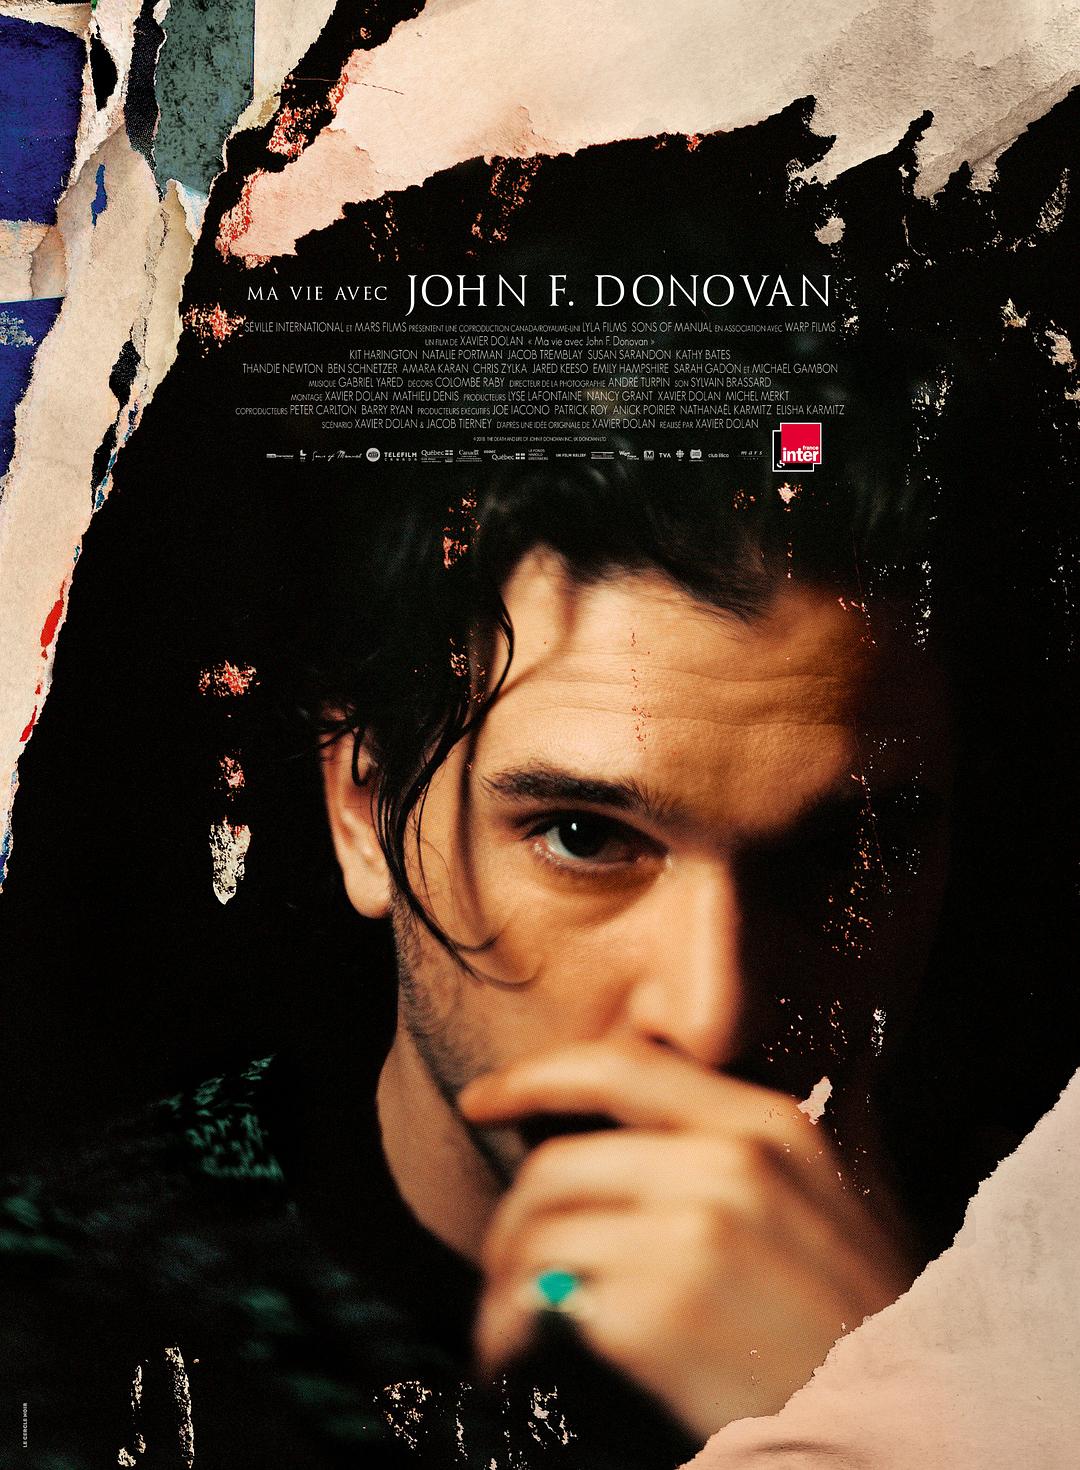 约翰·多诺万的死与生/多诺万师长的生与死 The.Death.and.Life.of.John.F.Donovan.2018.1080p.BluRay.REMUX.AVC.DTS-HD.MA.5.1-FGT 28.47GB-1.png